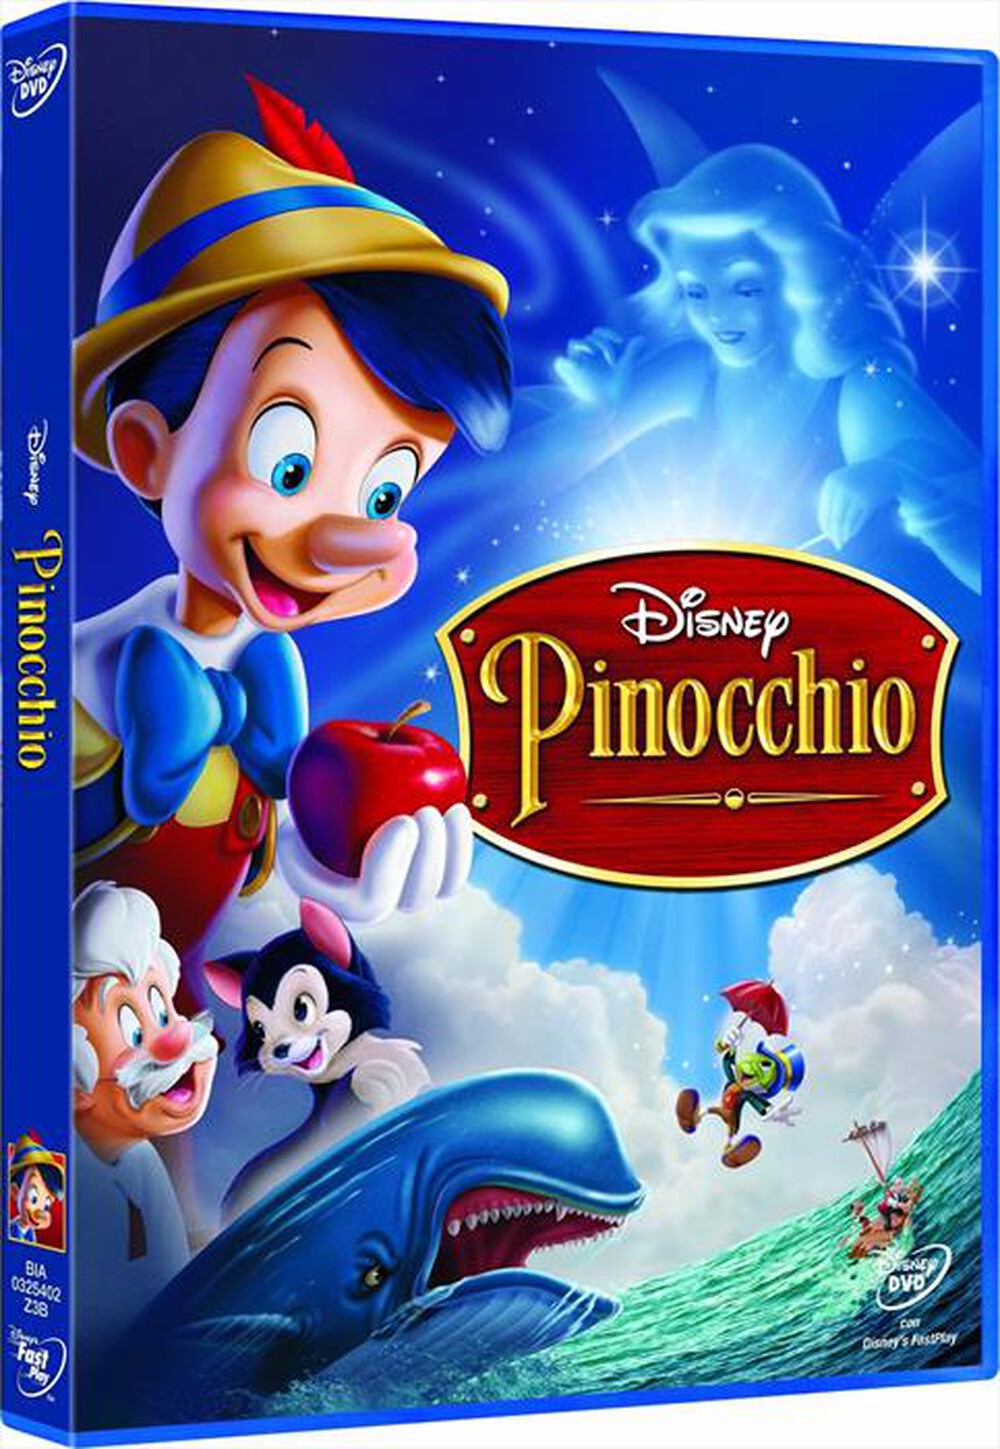 "EAGLE PICTURES - Pinocchio"